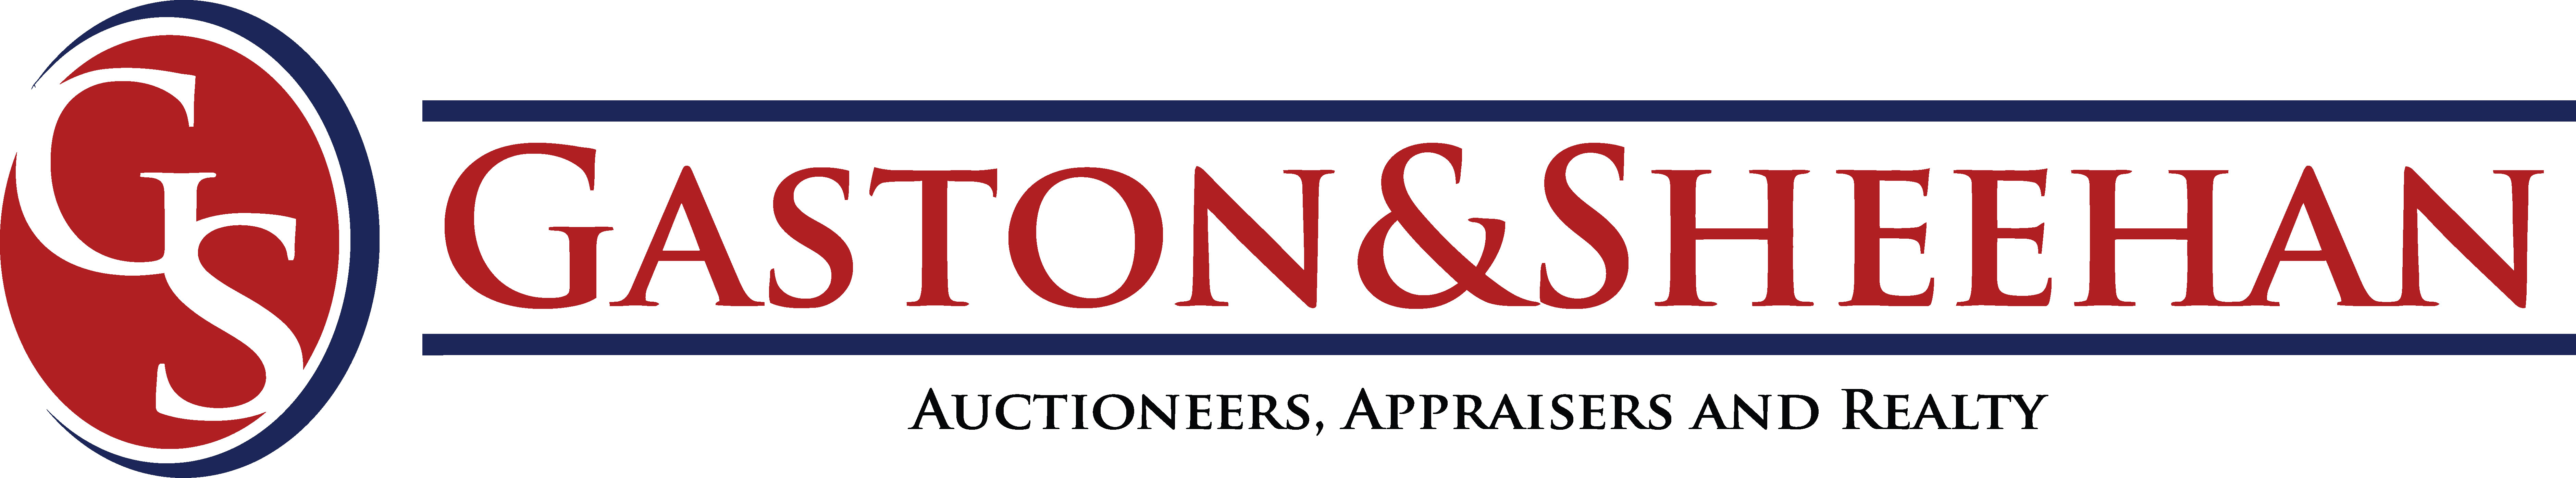 Gaston & Sheehan Auctioneers, Inc. company logo